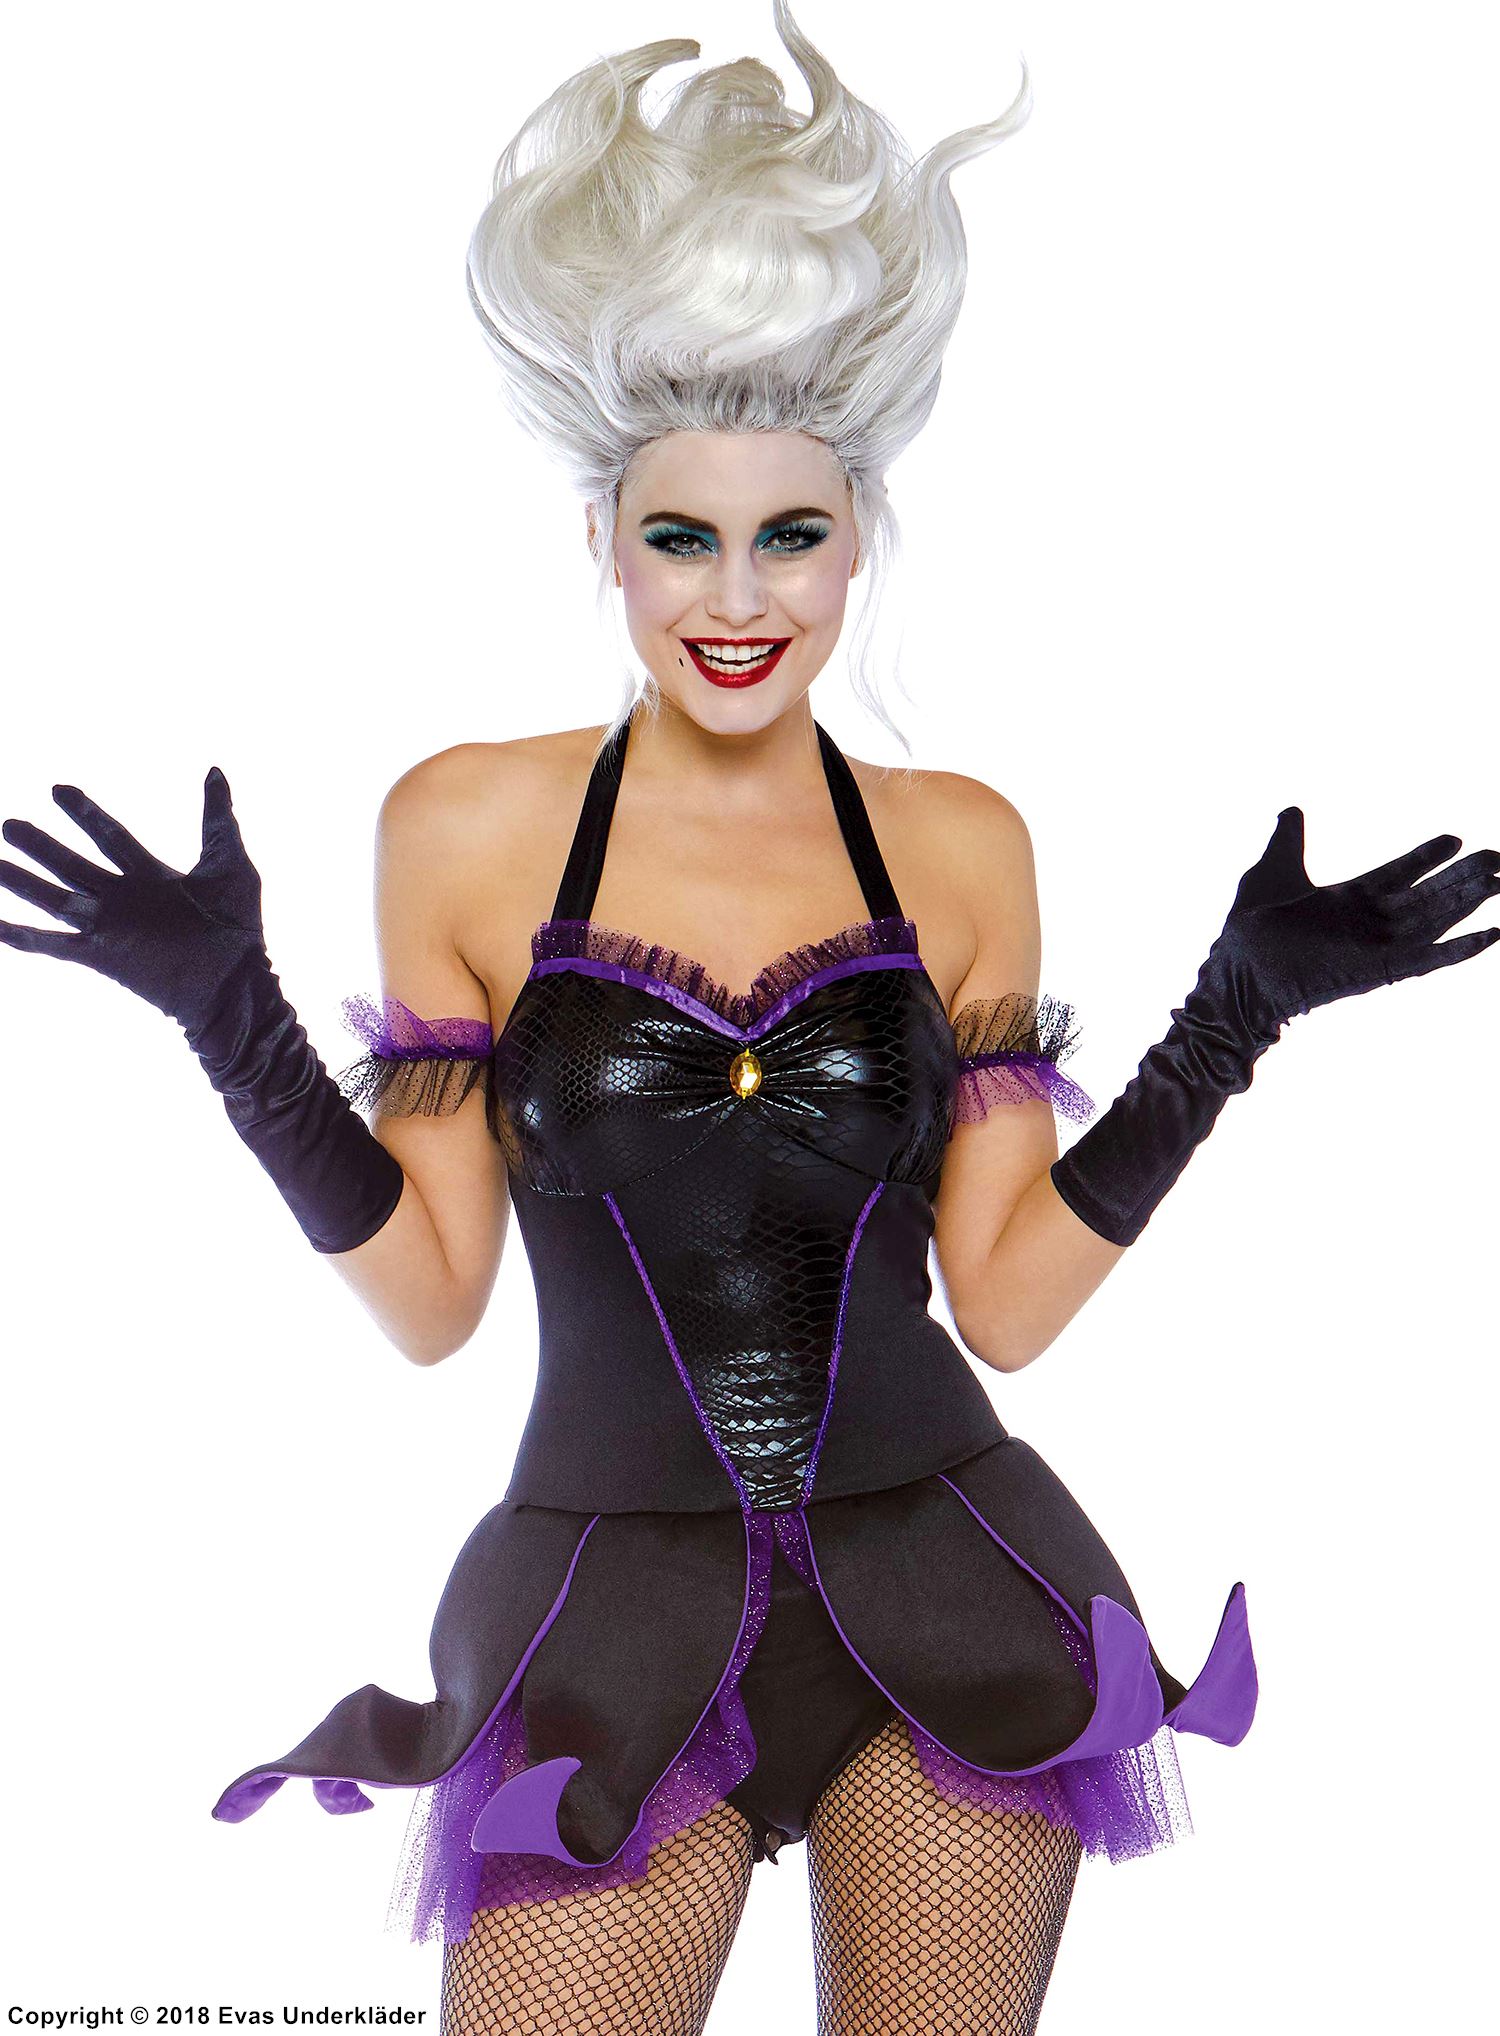 Ursula the sea witch from Little Mermaid, body costume, rhinestones, ruffles, glitter